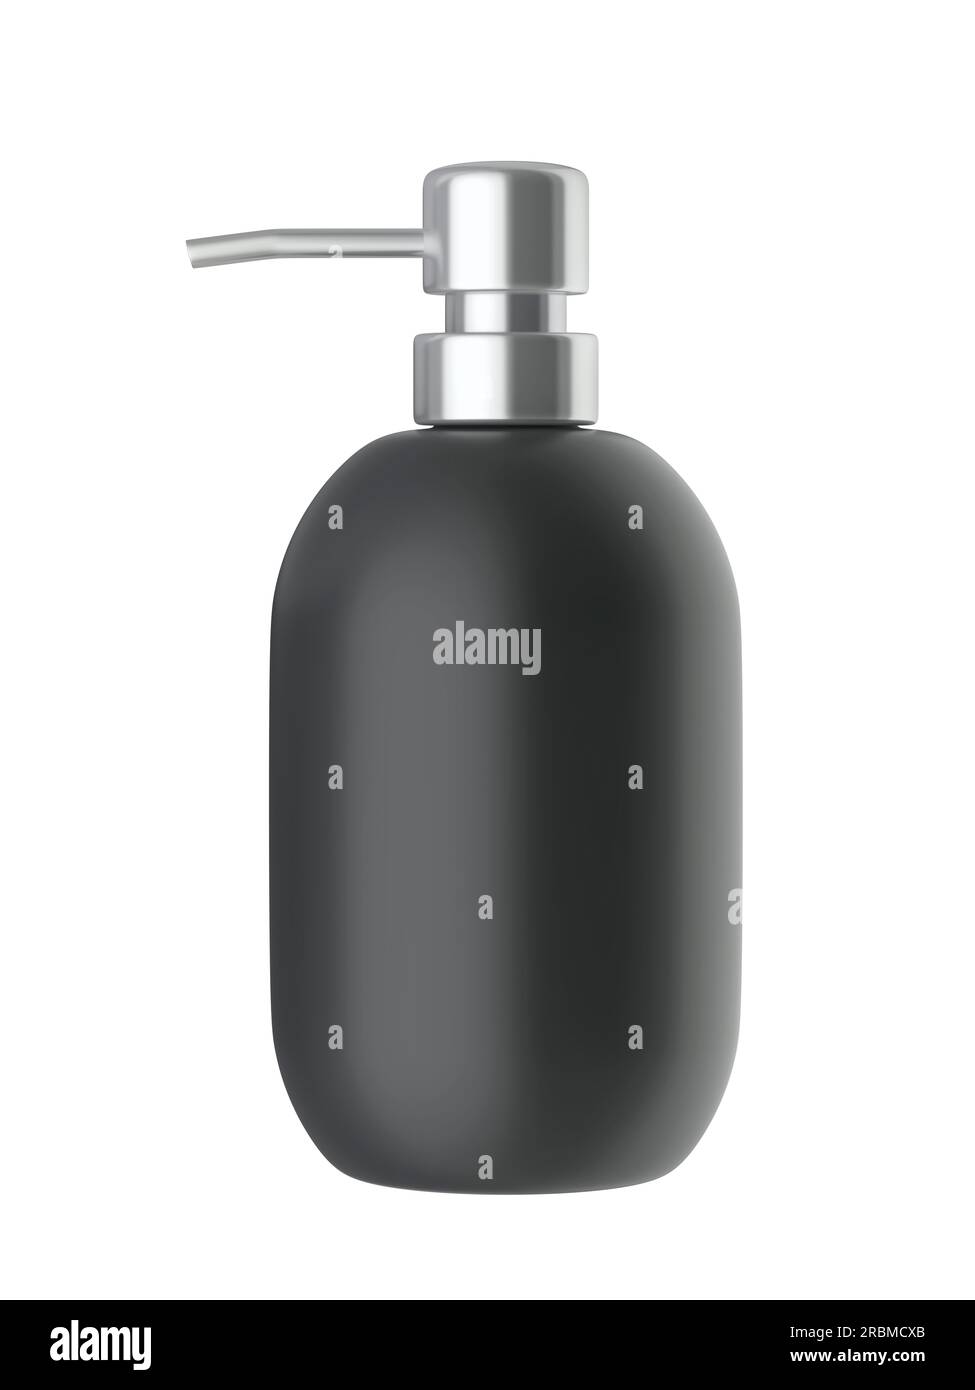 https://c8.alamy.com/comp/2RBMCXB/black-liquid-soap-bottle-isolated-on-white-background-2RBMCXB.jpg